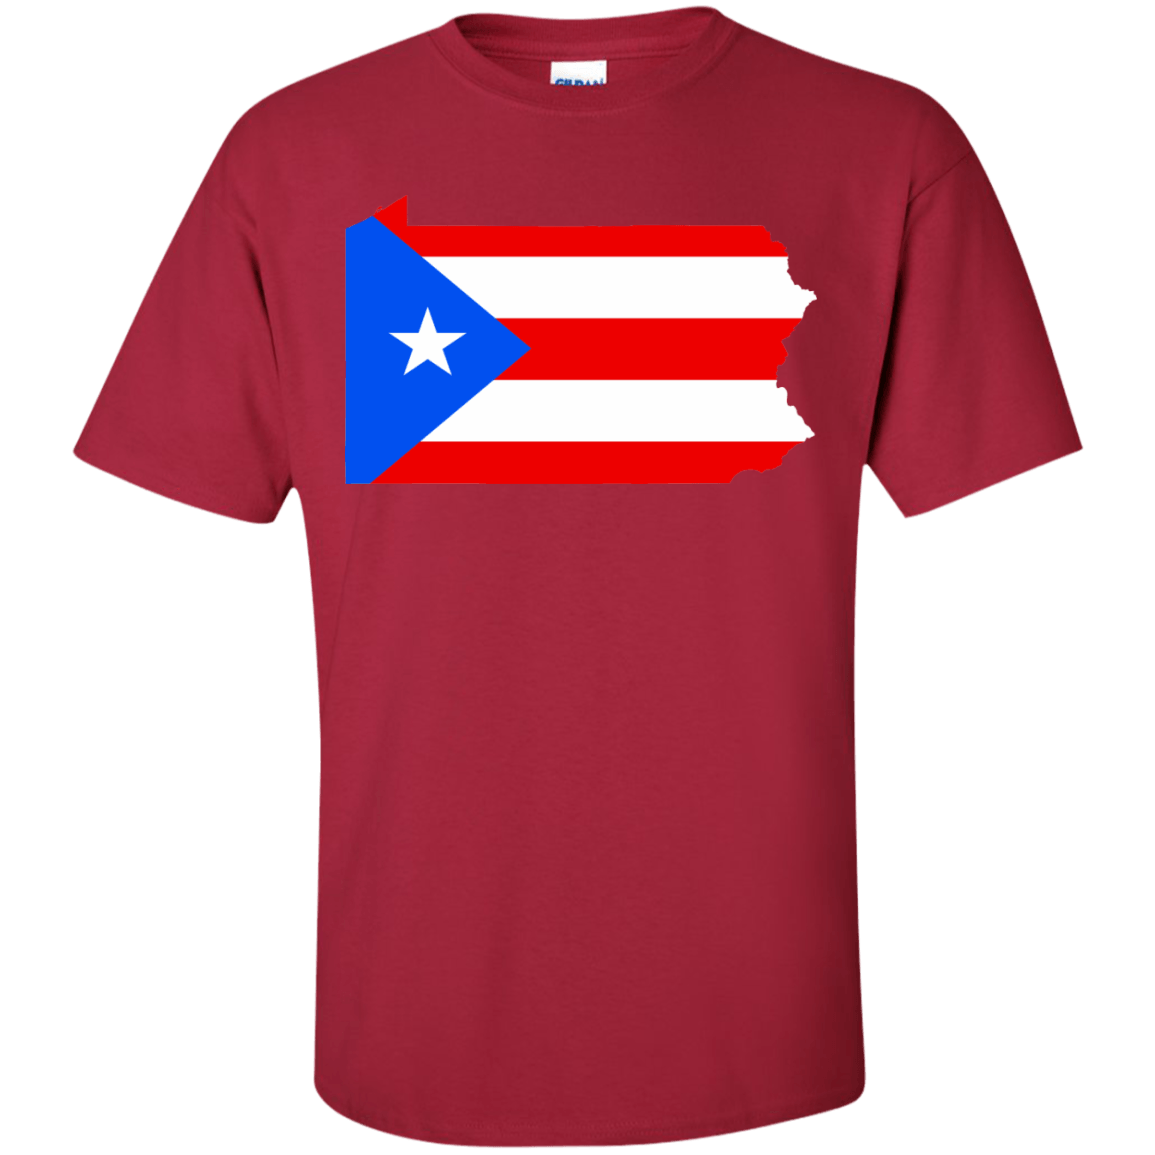 Shirt - Rican In Pennsylvania